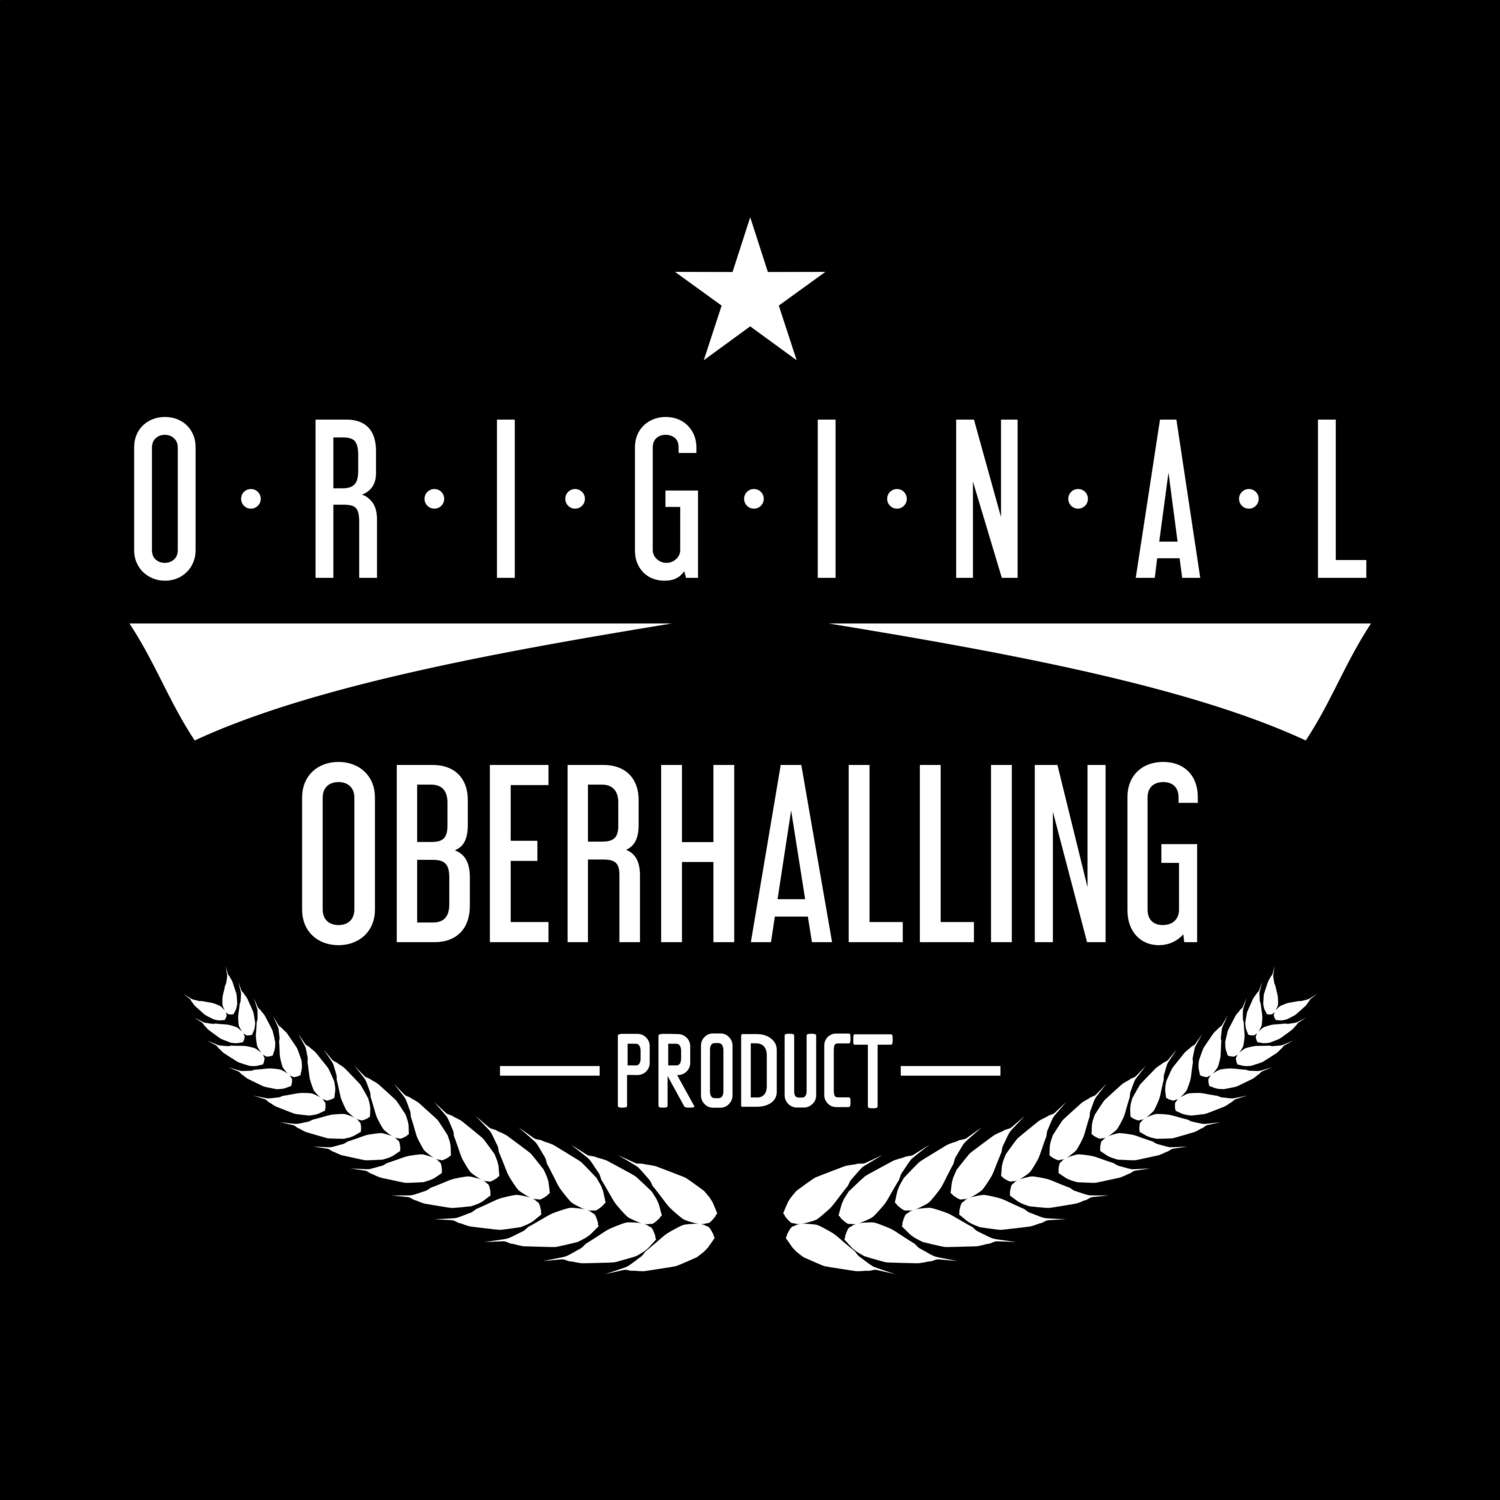 Oberhalling T-Shirt »Original Product«